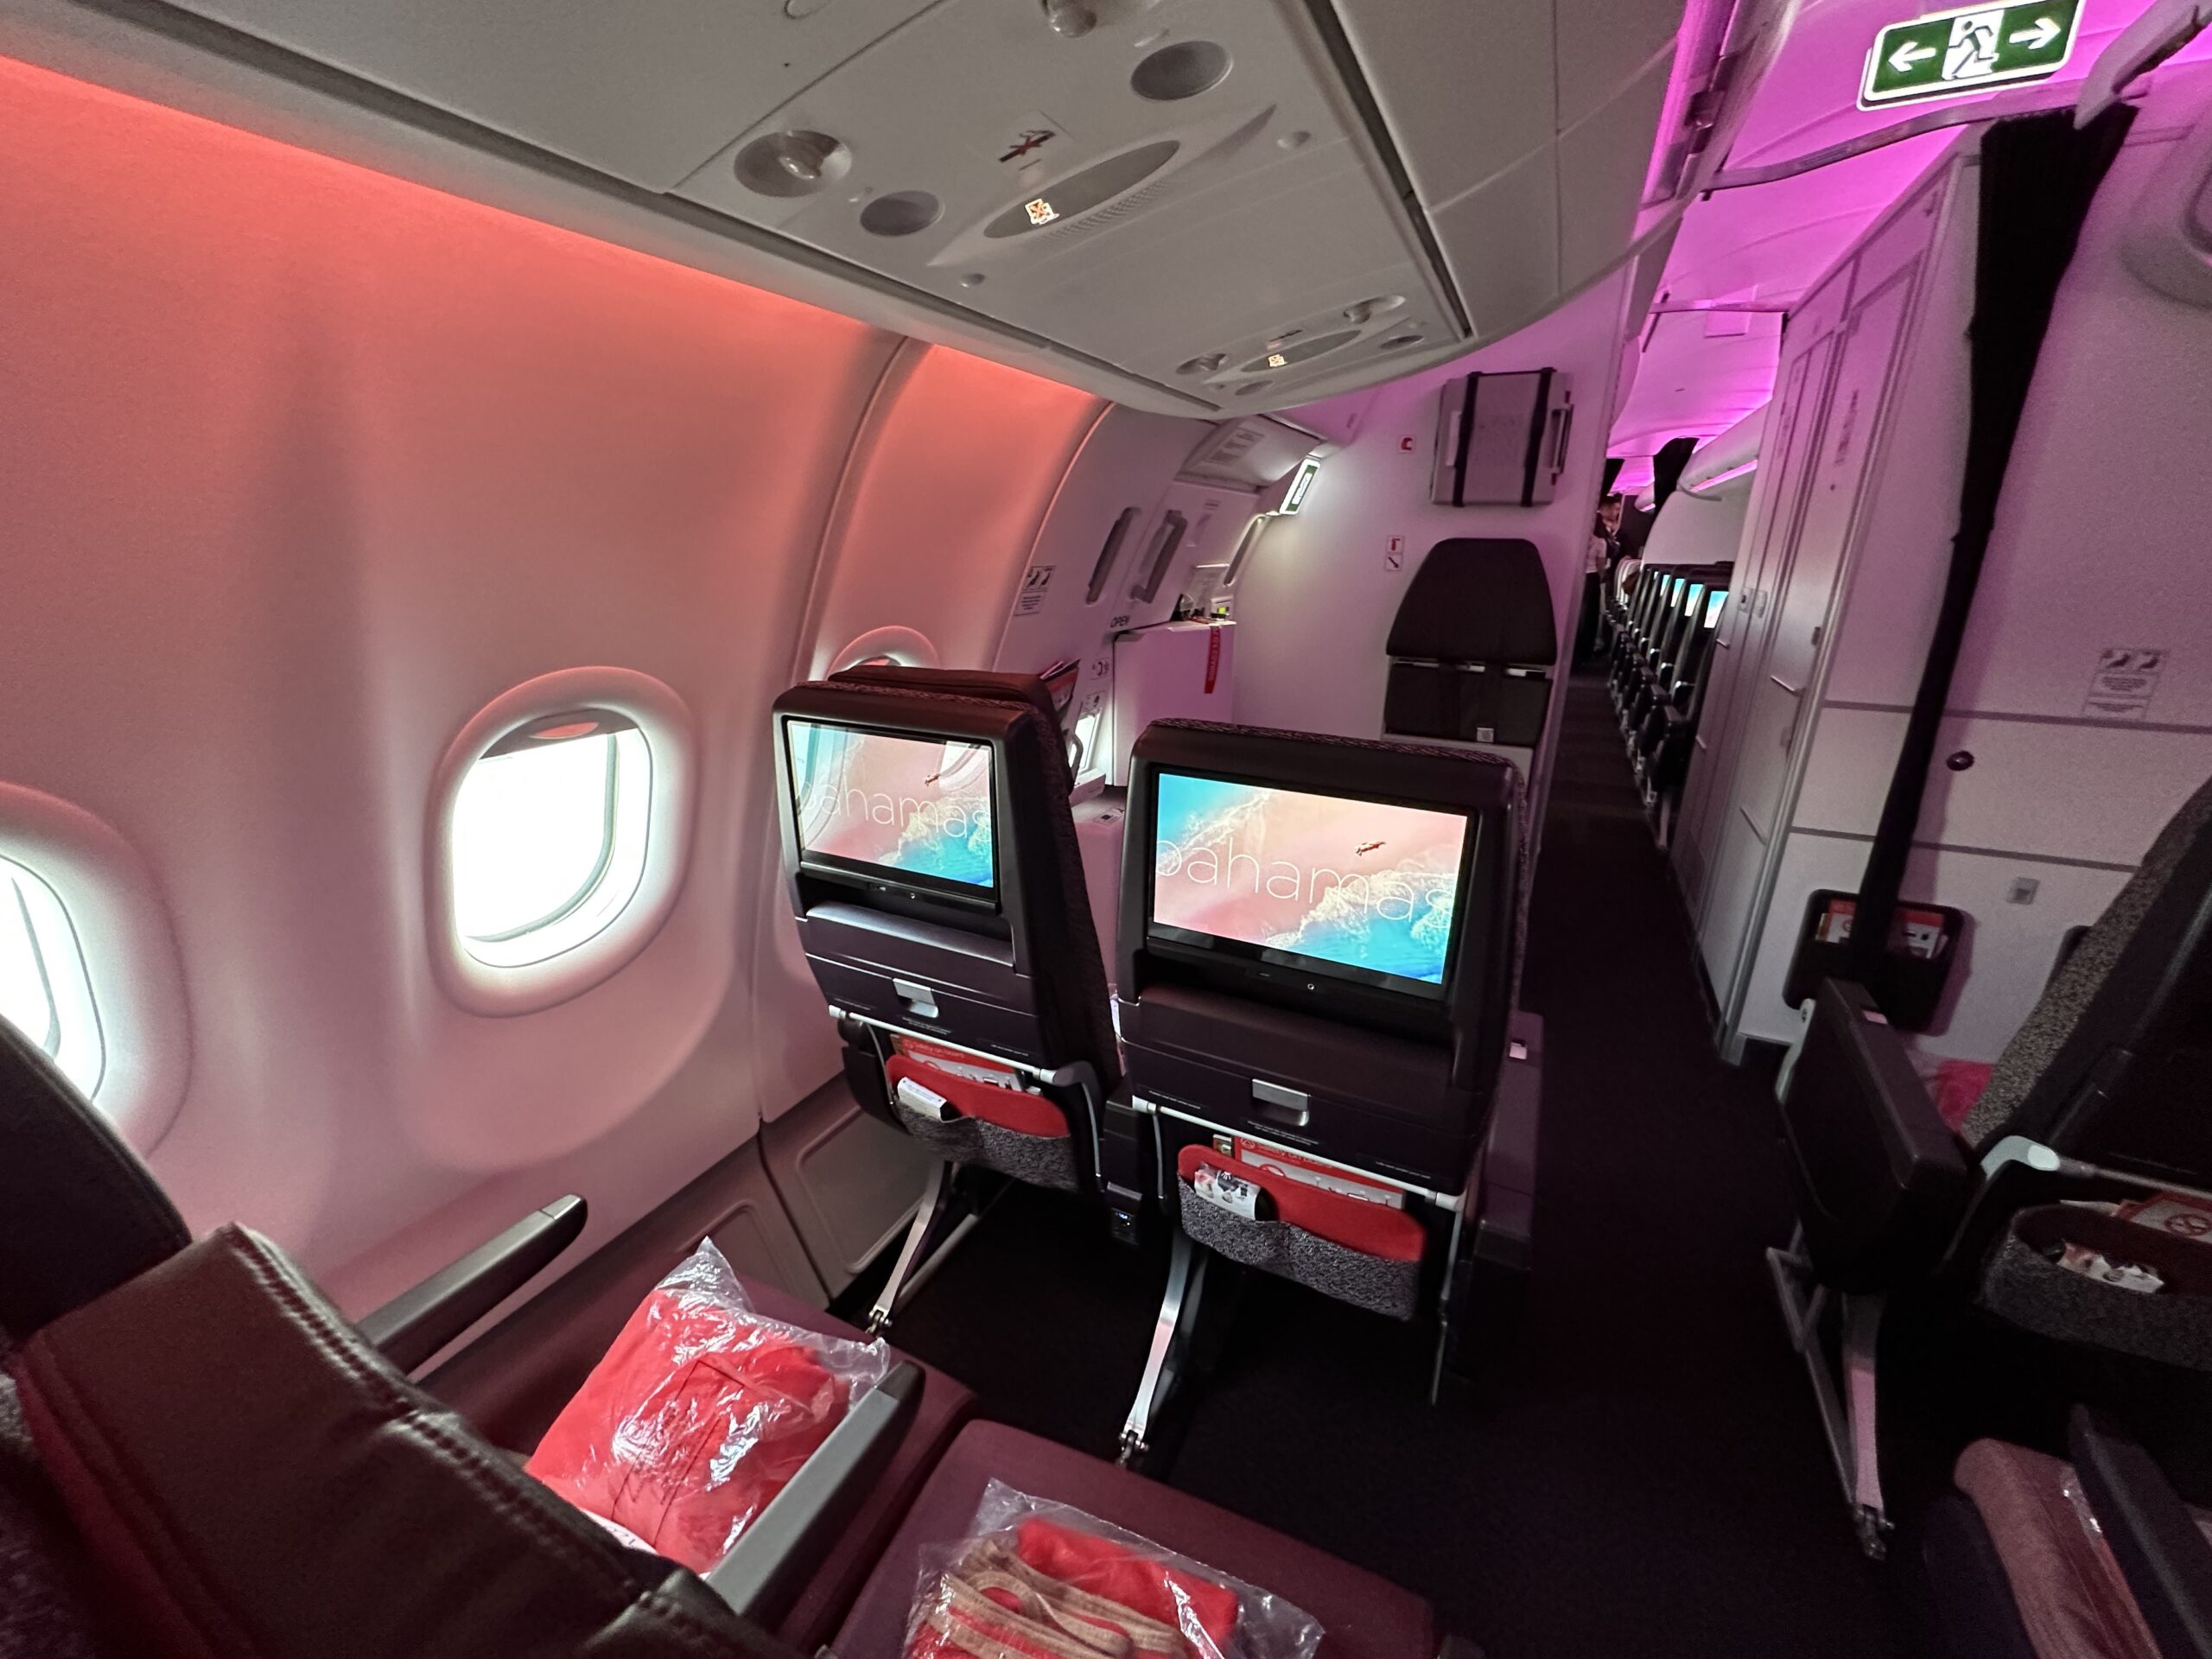 Photo of: Virgin Atlantic A330neo Cabin